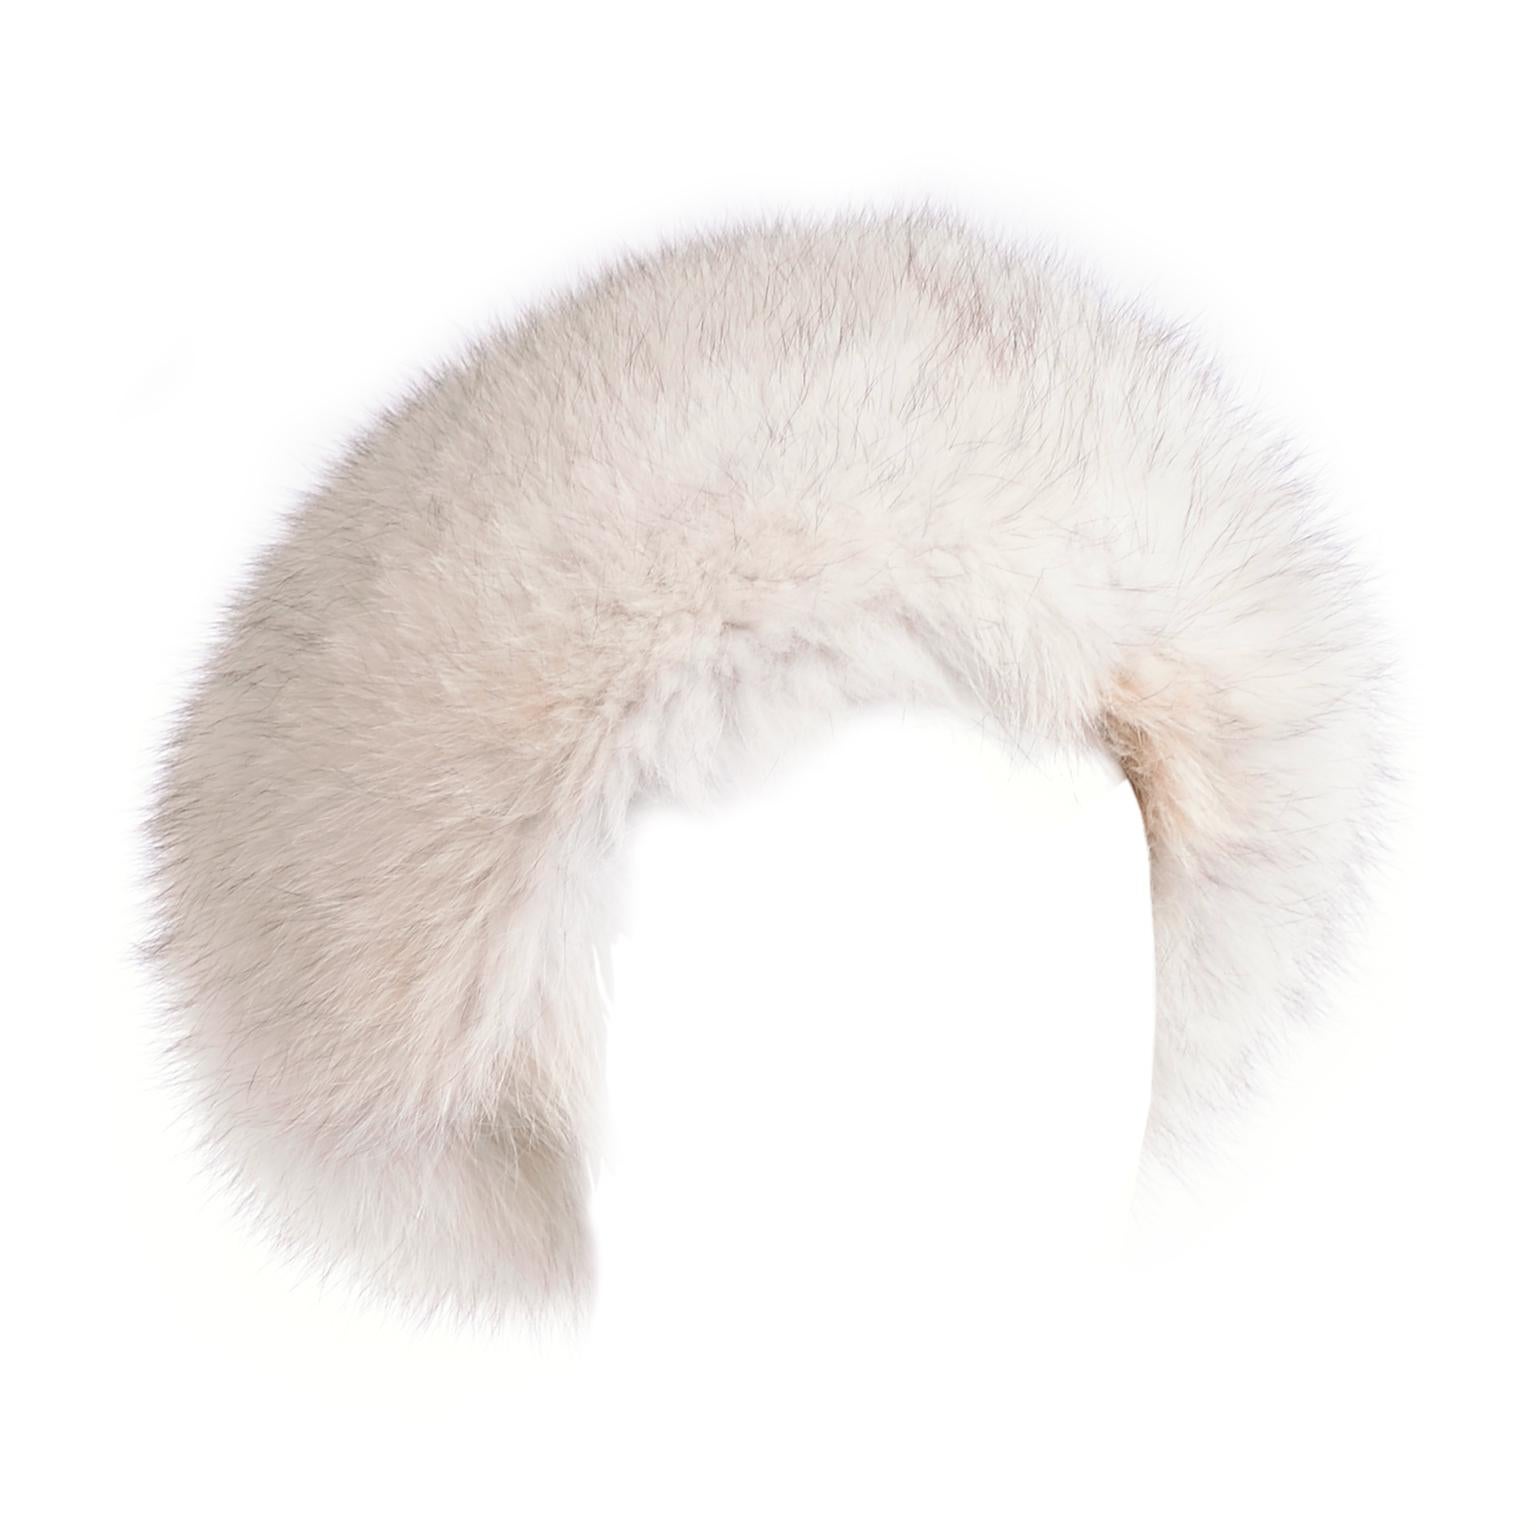 Rare James McQuay Furrier Vintage Fox Fur Hat Made in New York